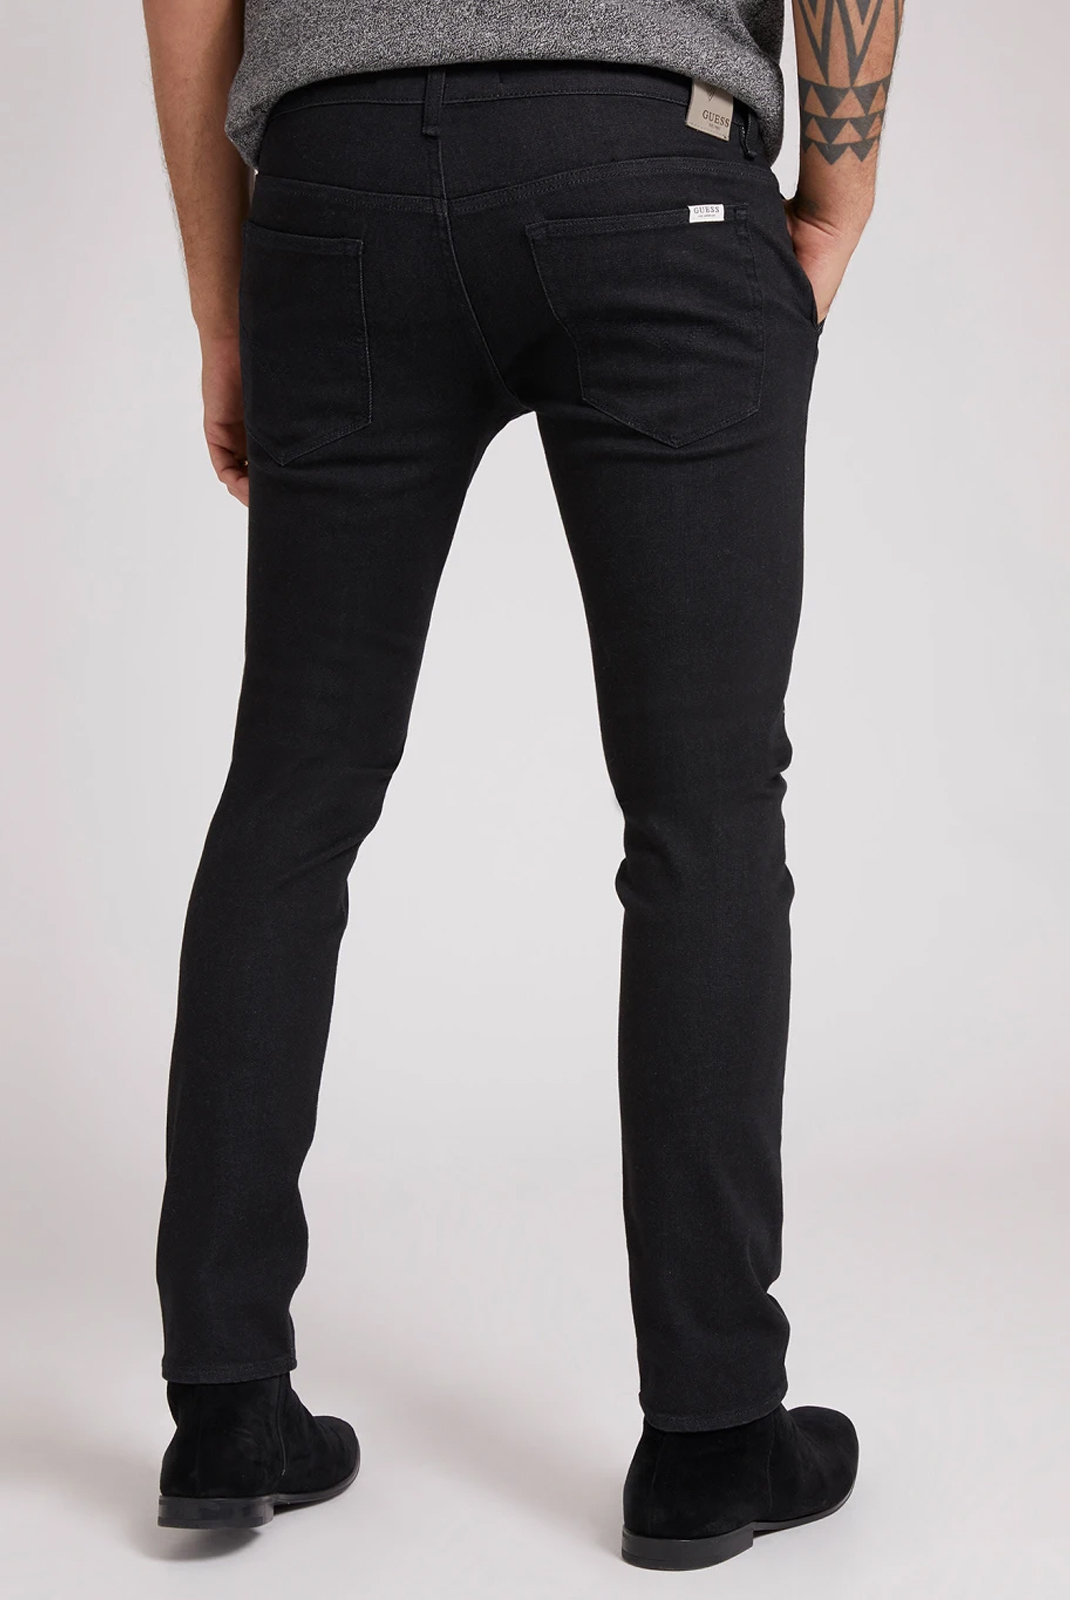 Jeans Skinny Noir M1ba81 D4hp1 Guess